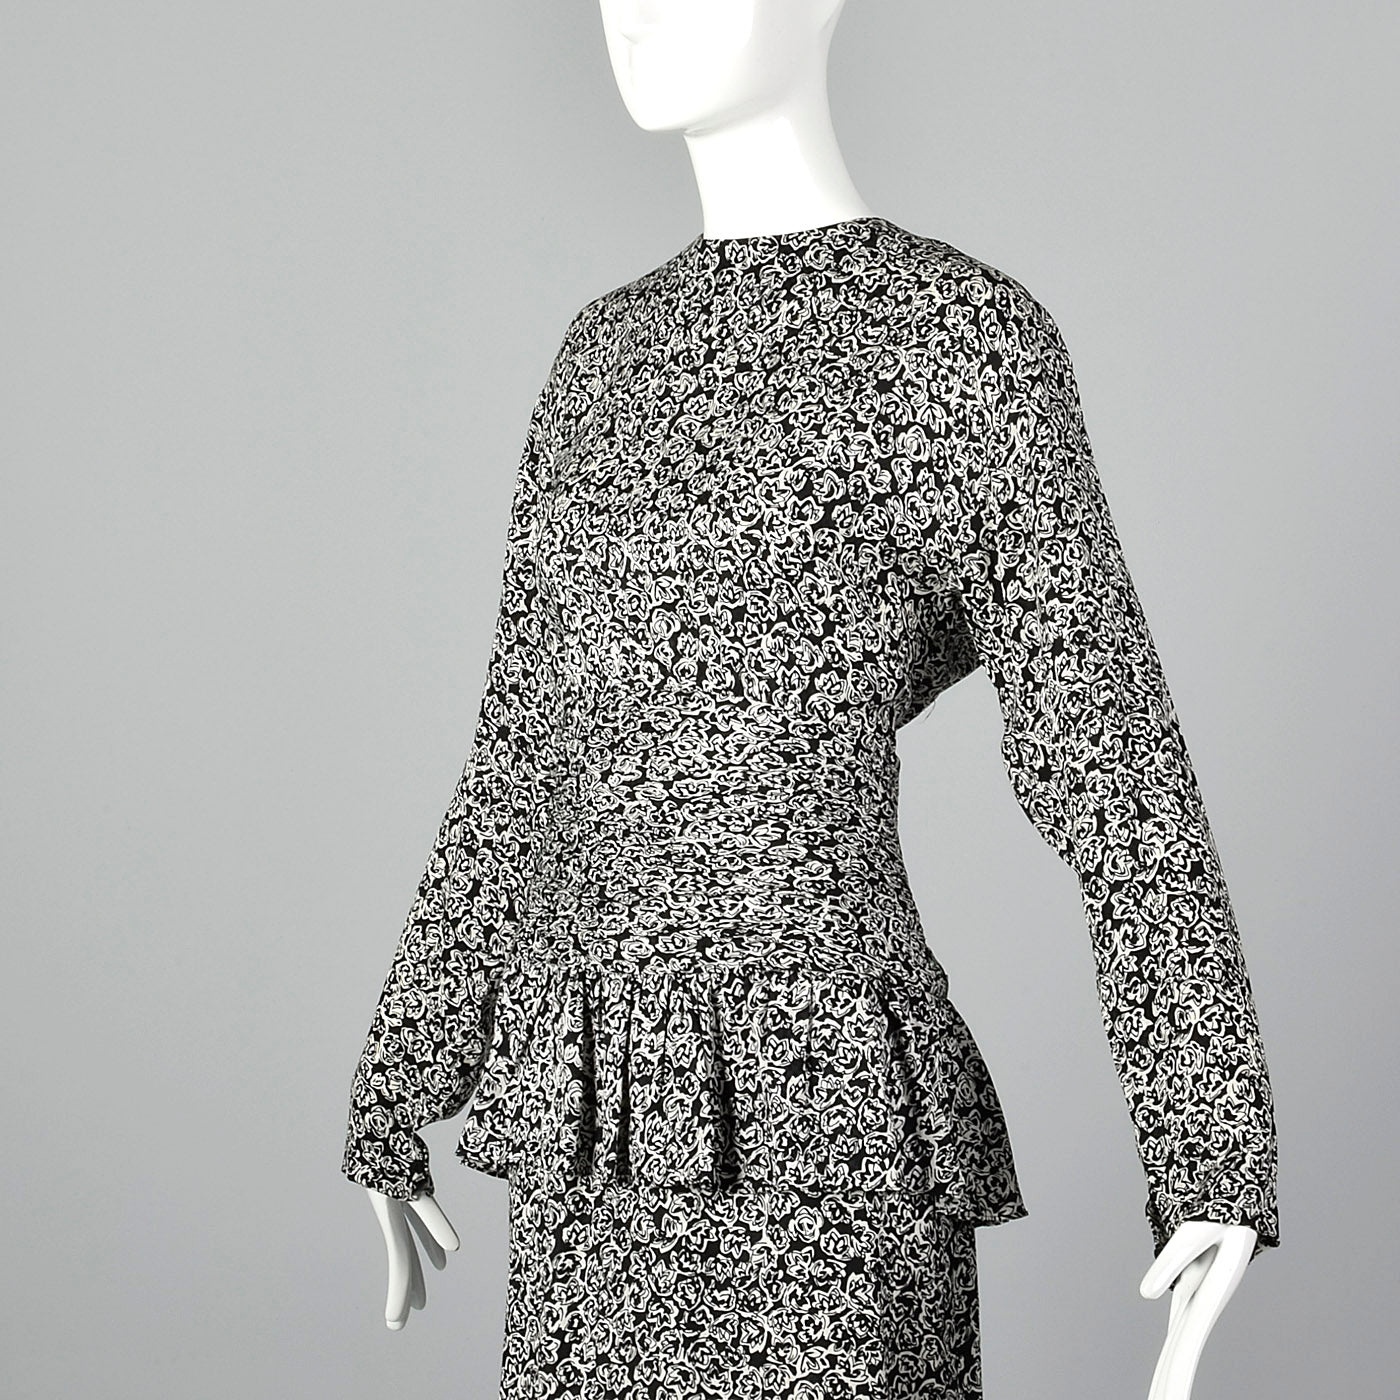 1980s Christian Dior Black and White Dress